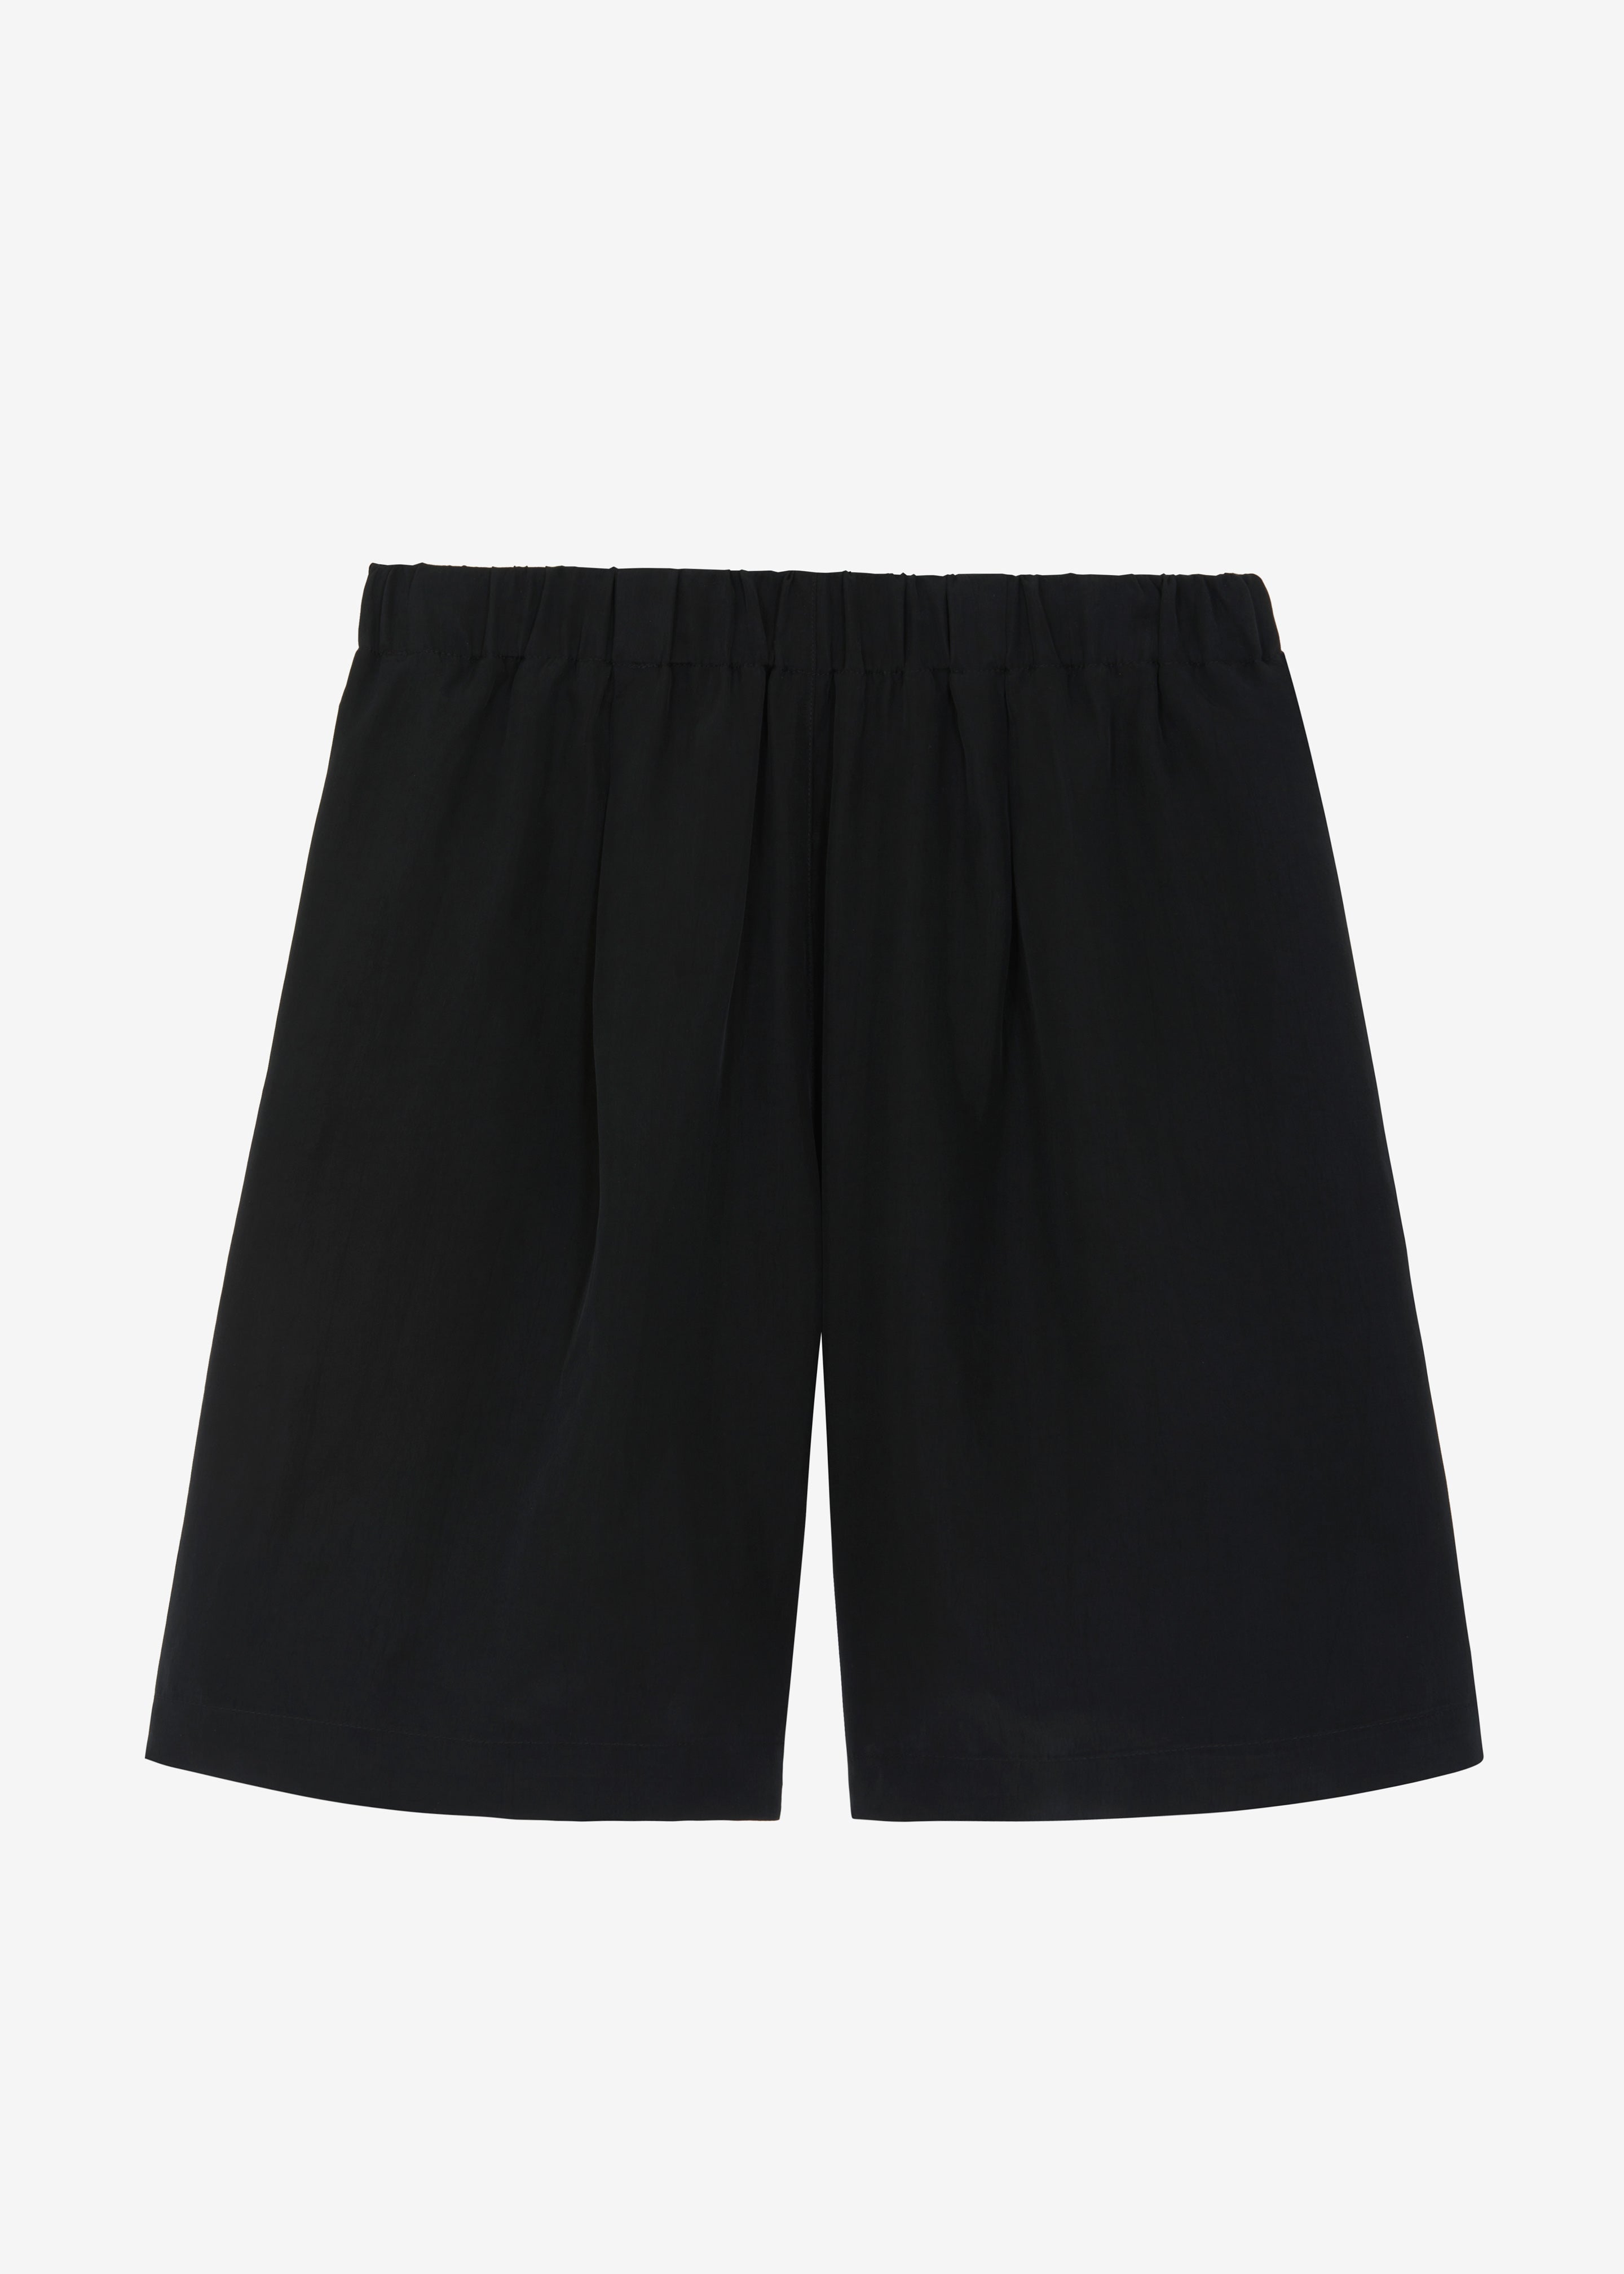 Leland Silky Boxer Shorts - Black - 8